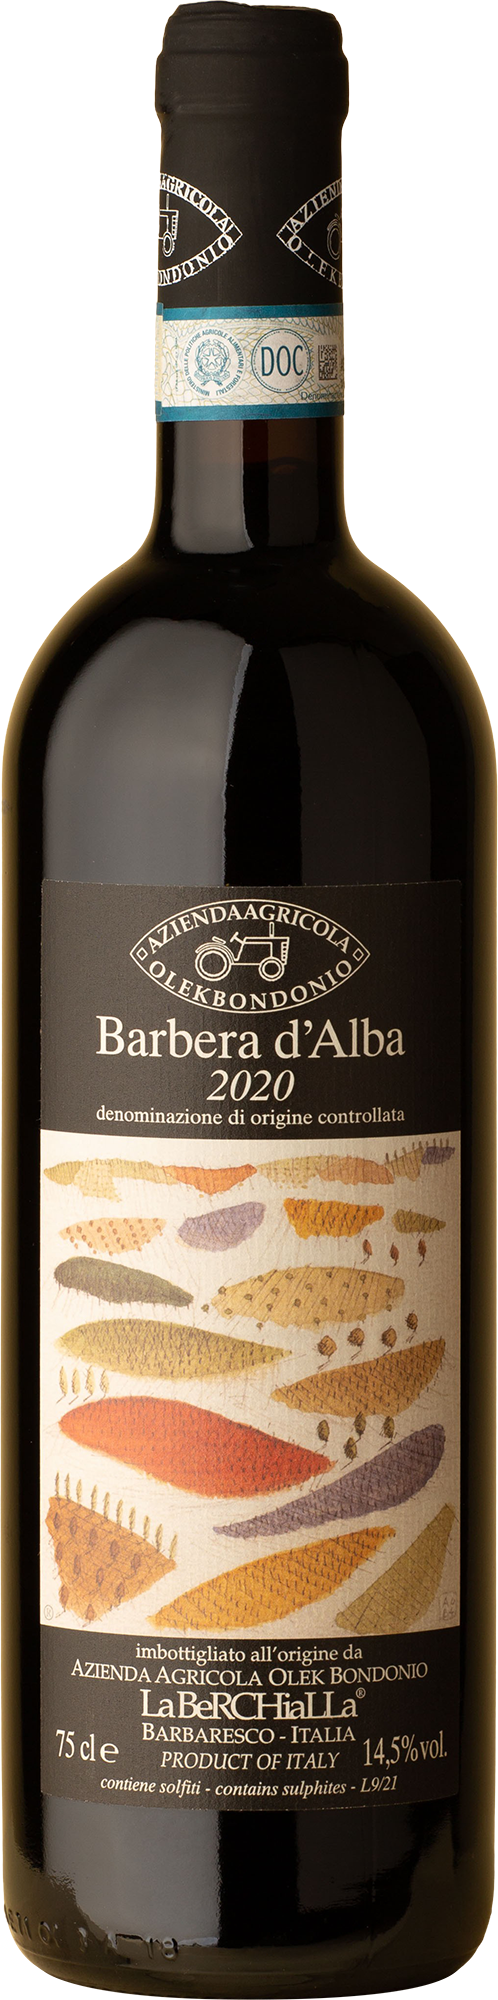 Olek Bondonio - Barbera d'Alba 2020 Red Wine